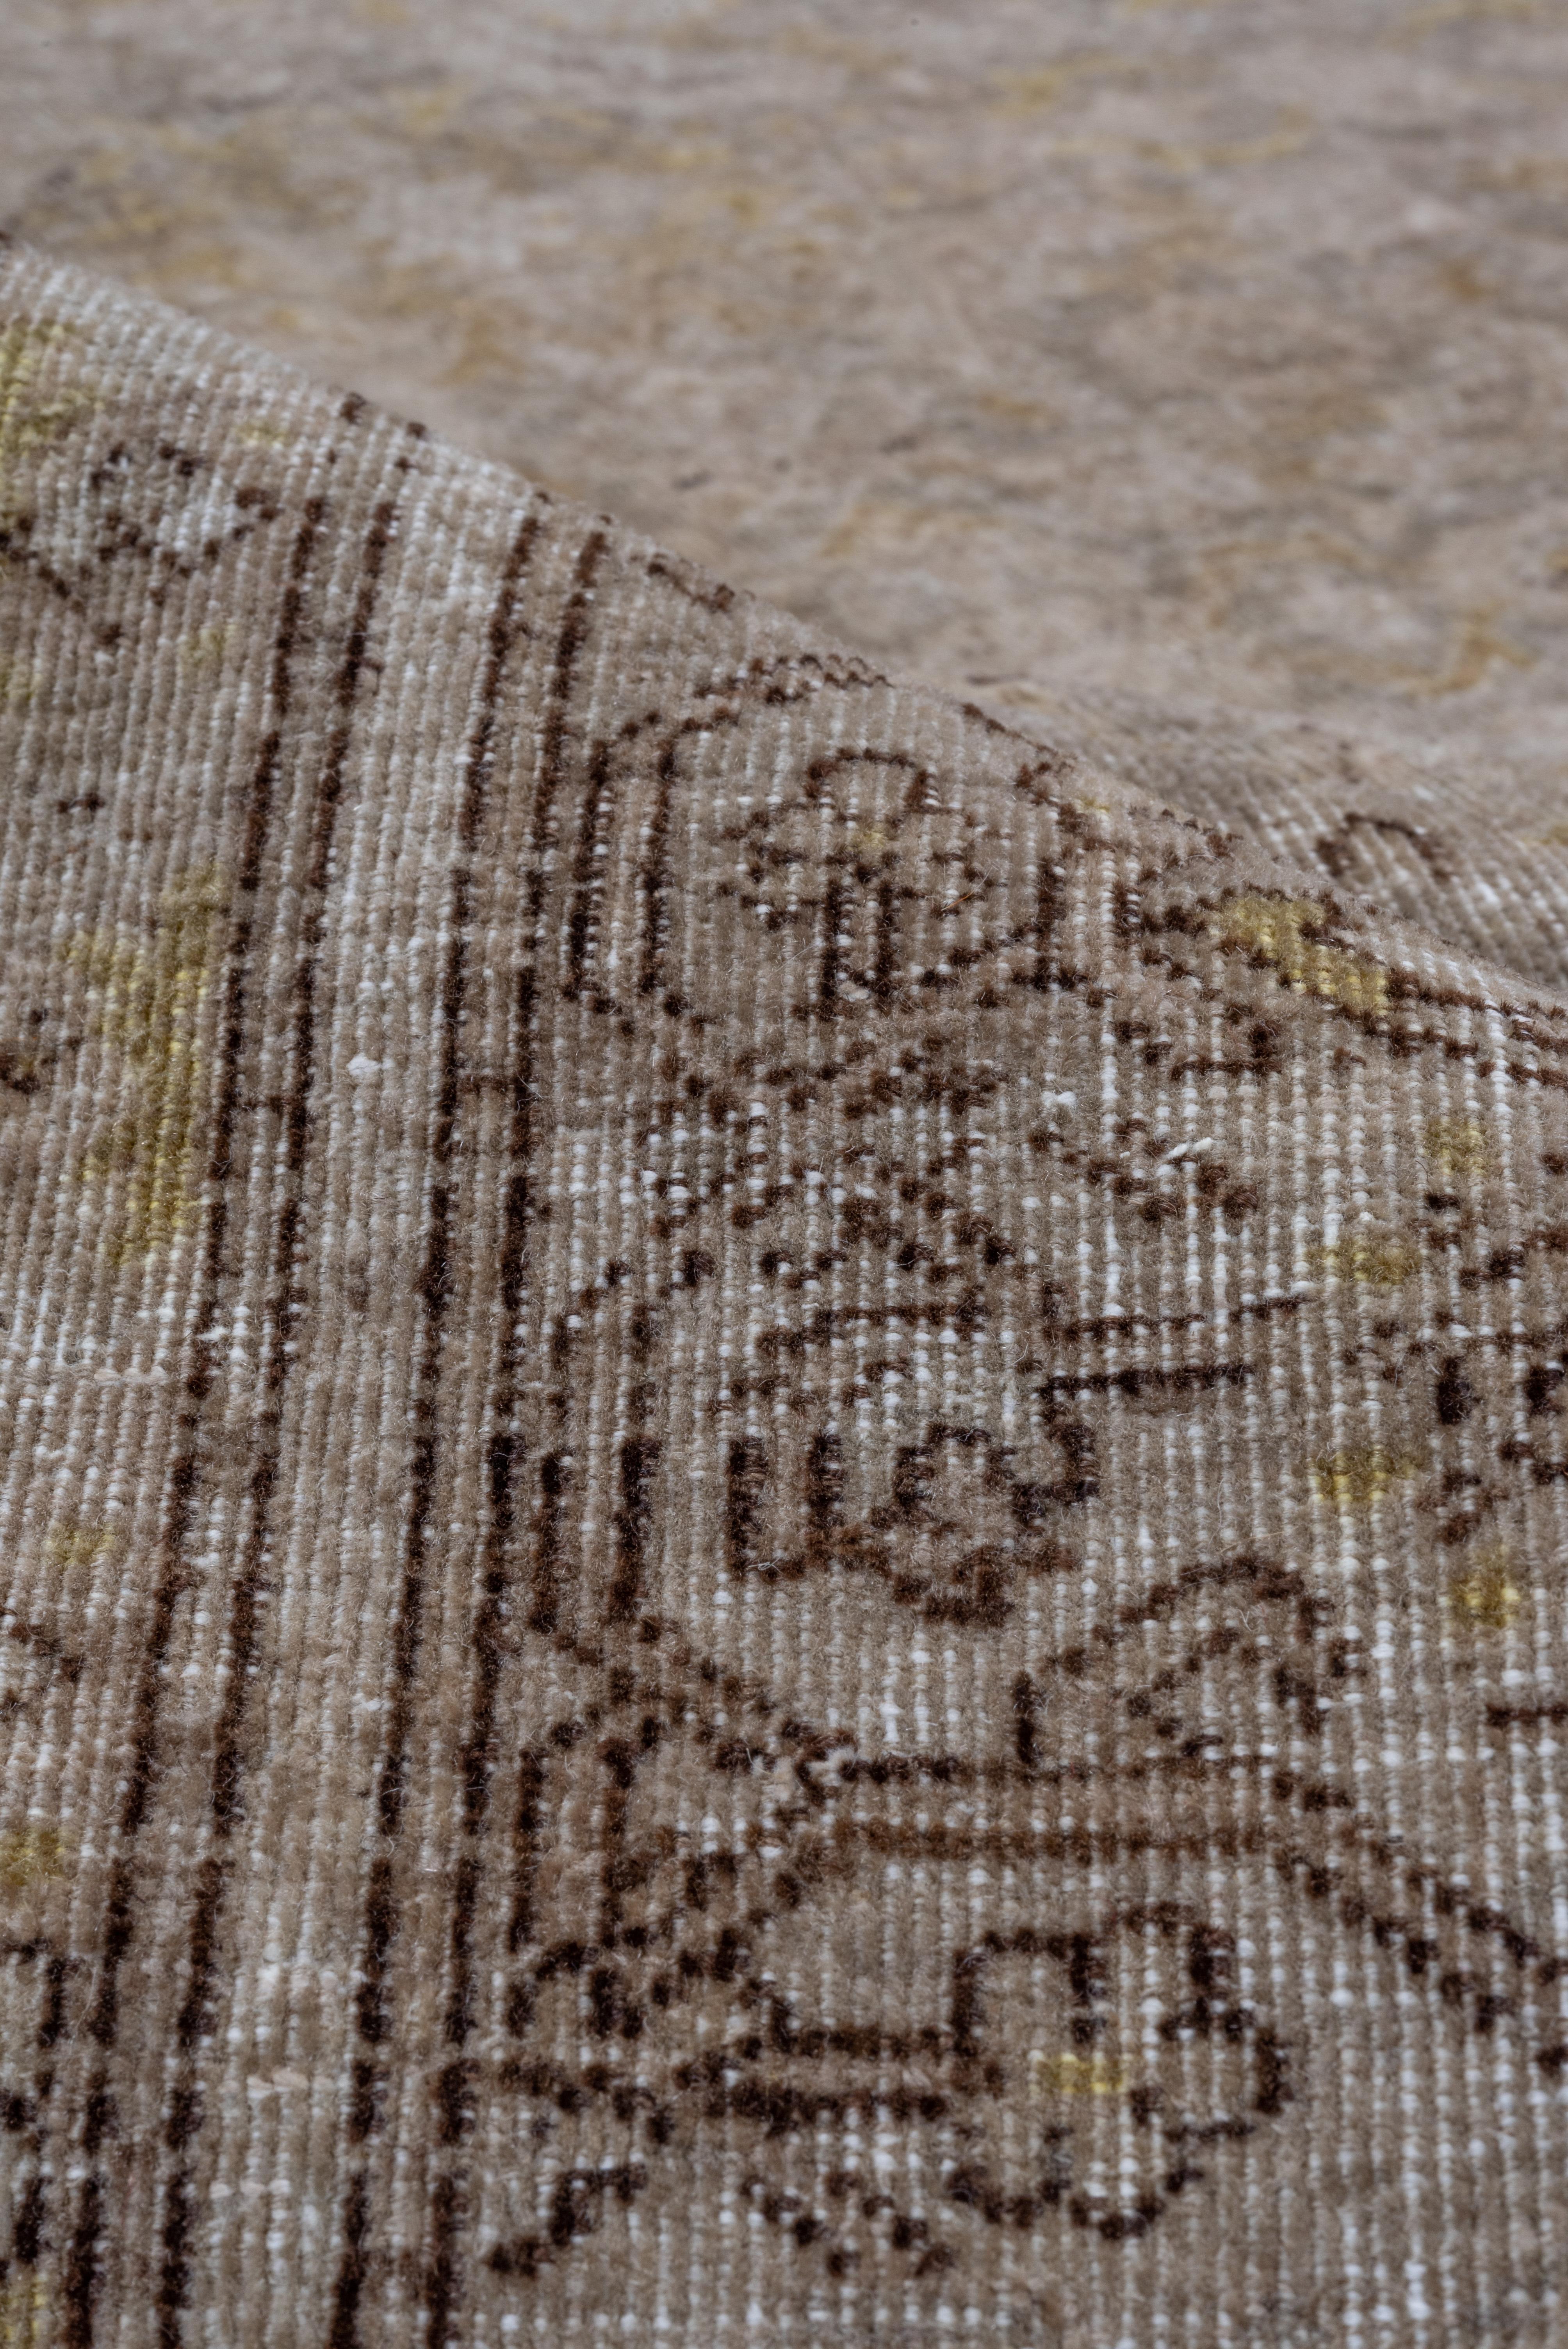 Tribal Antique Turkish Sivas Rug, Herati Design, Light Brown Field with Gold Tones